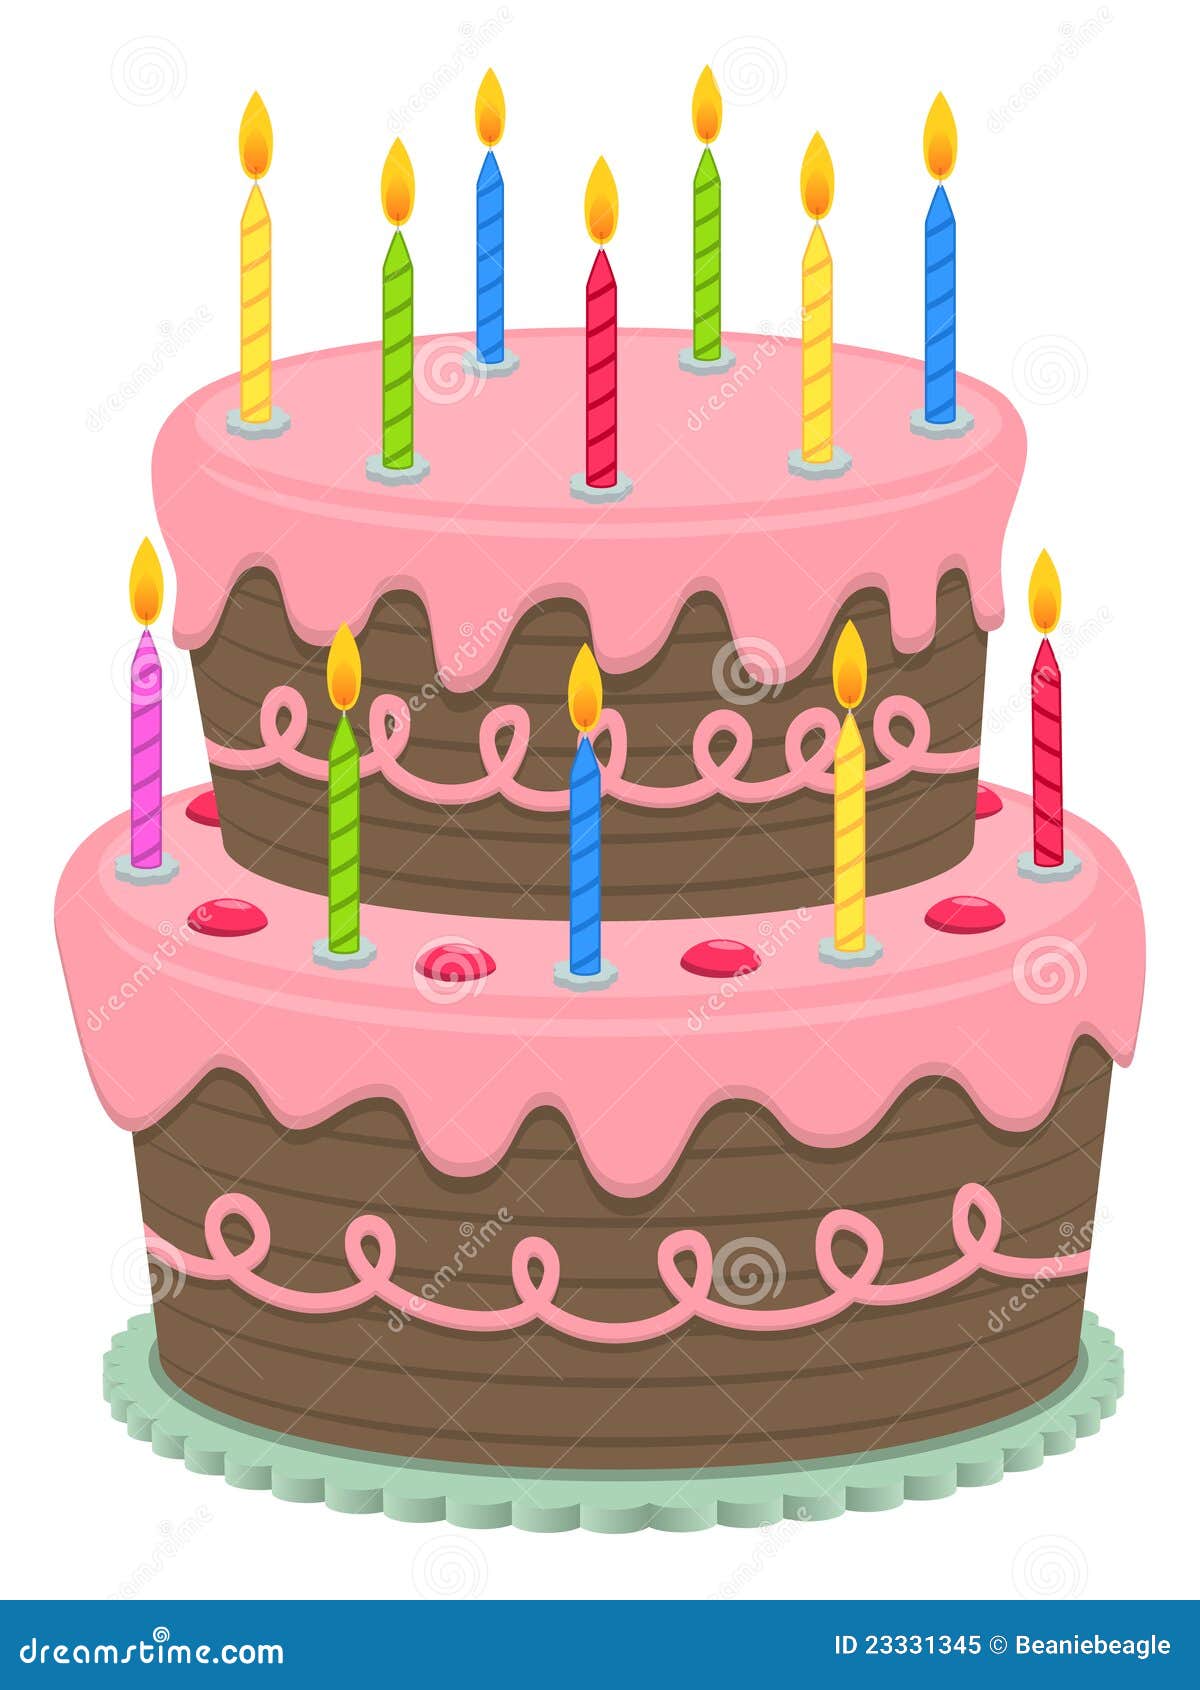 Birthday Cake stock vector. Illustration of celebration - 23331345